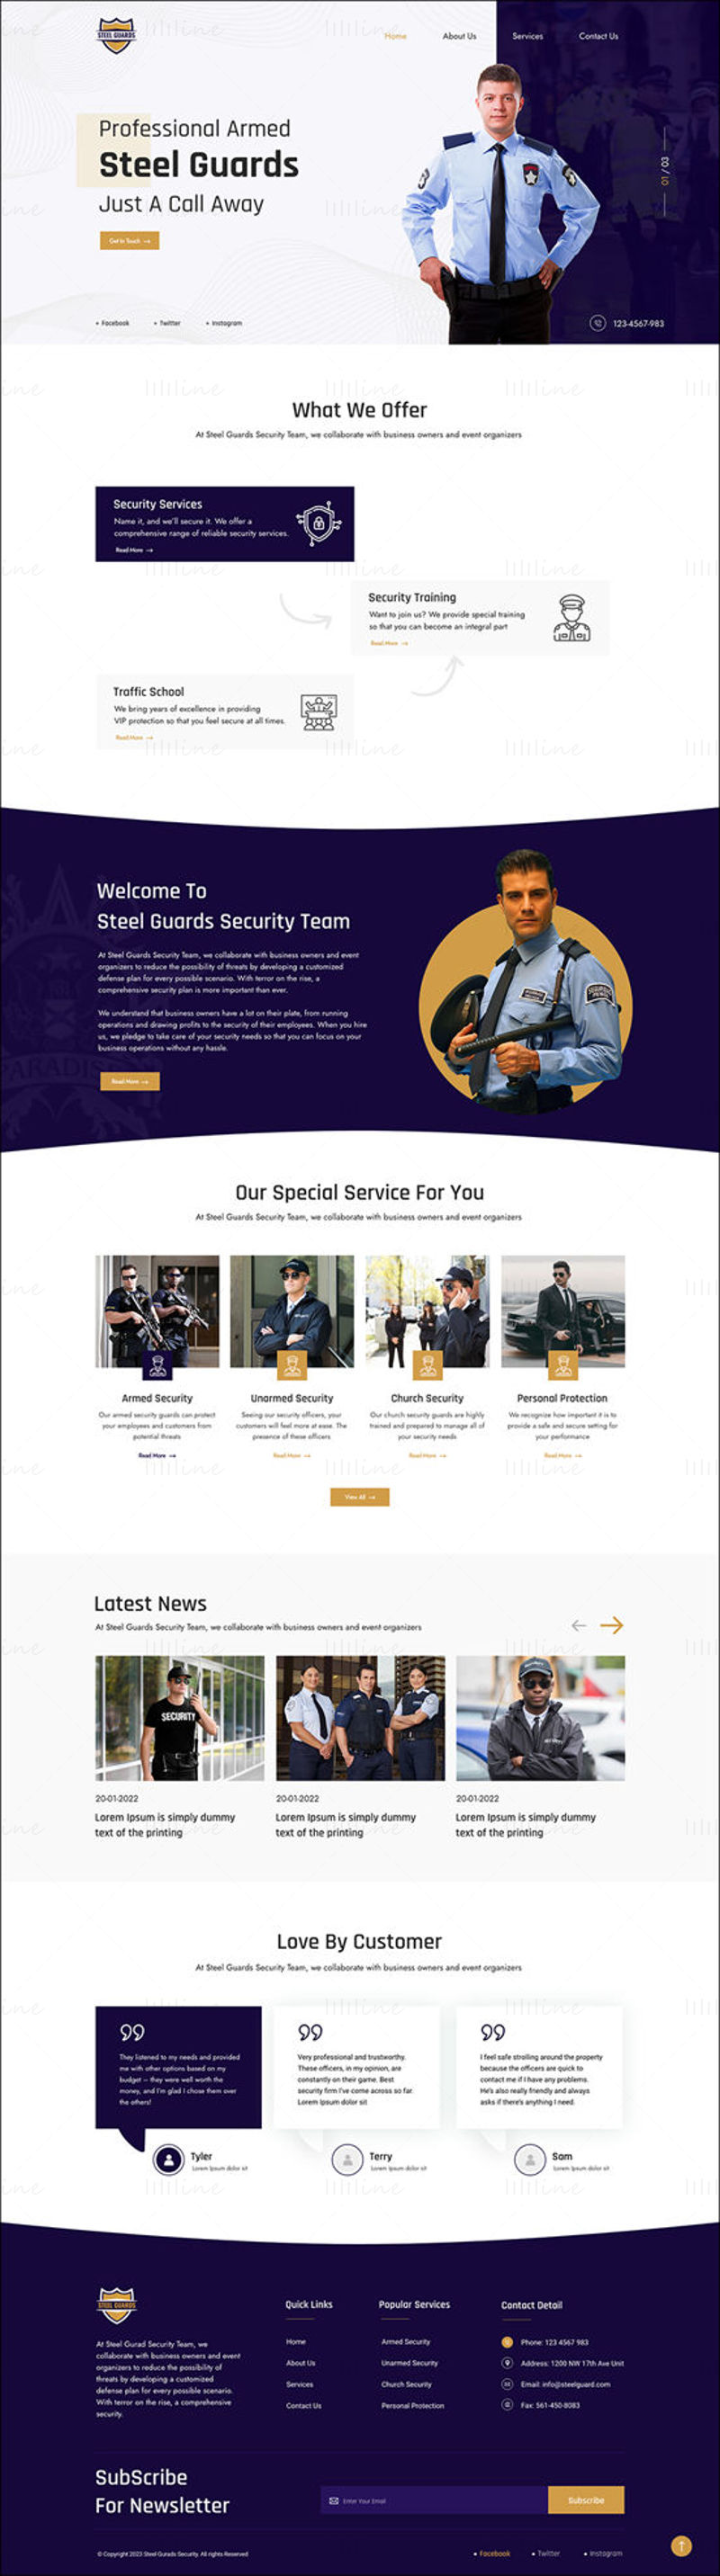 Steel Guard Website Landing Page UI Template - Adobe XD